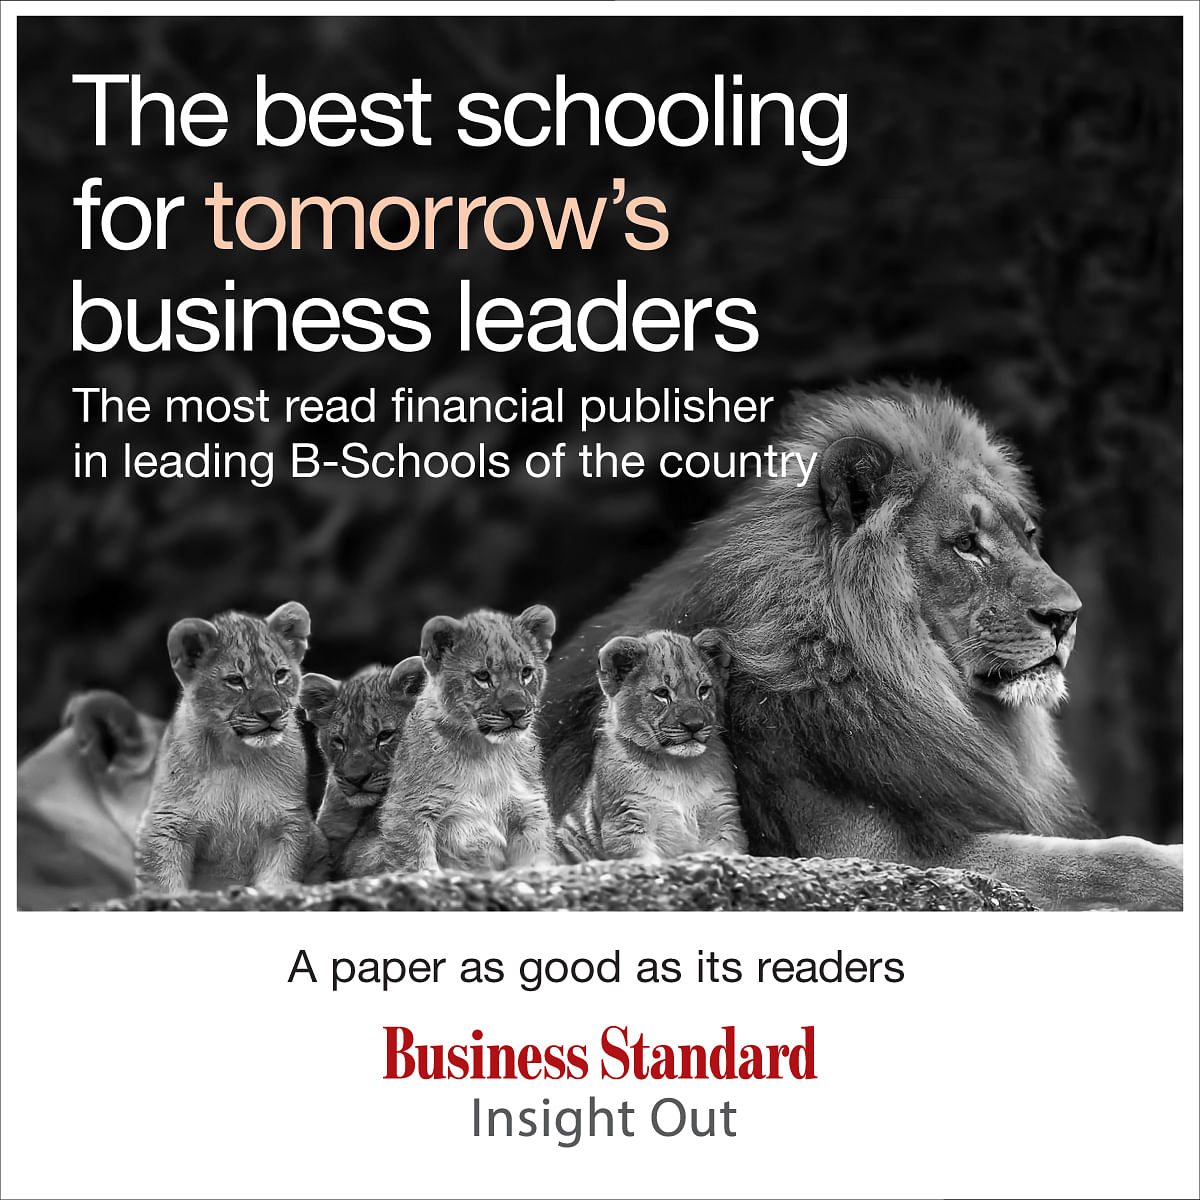 “Digital subscribers should overtake print in three to five years”: Business Standard’s Sachin Phansikar